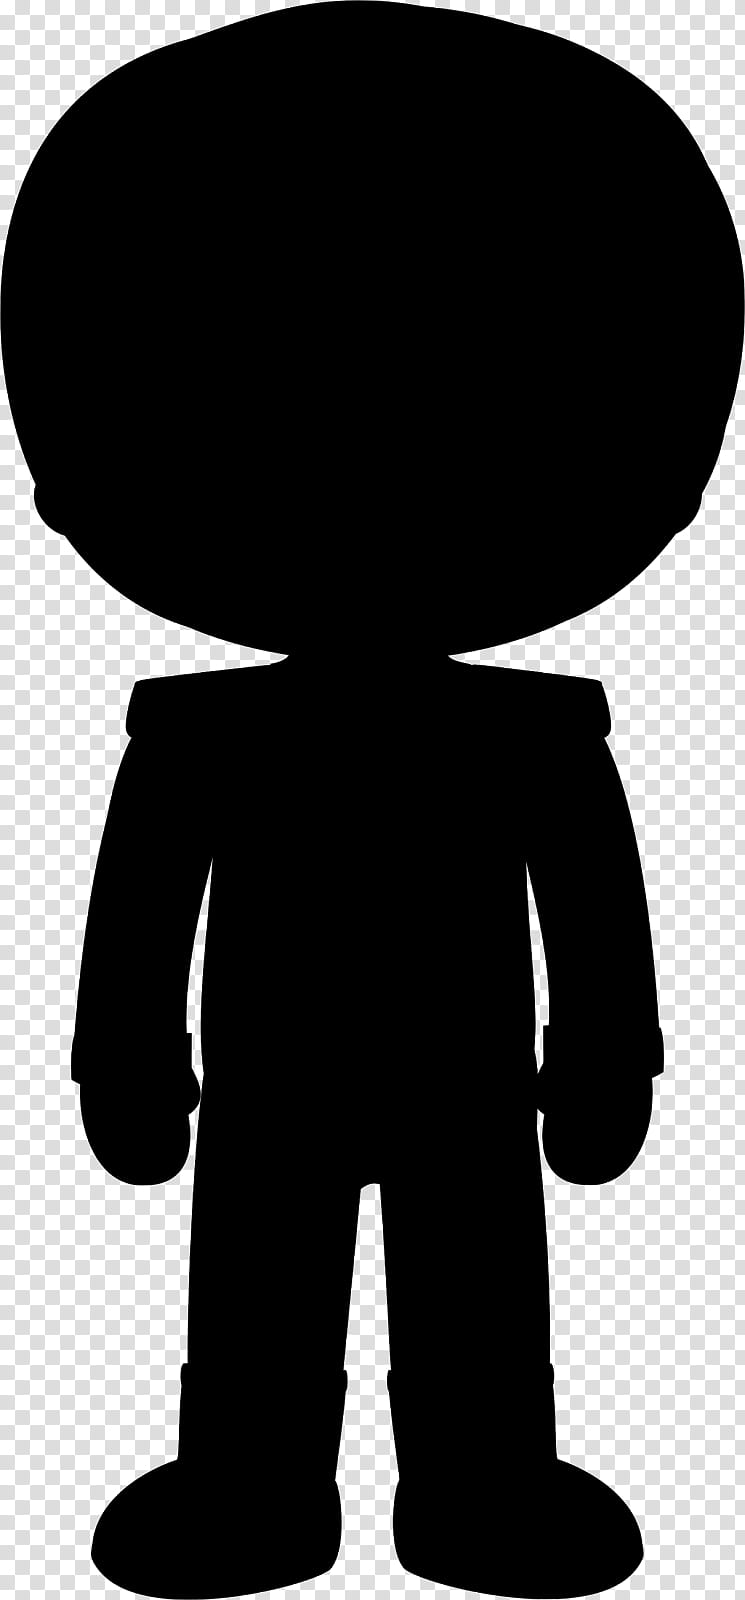 Chair Black, Human, Silhouette, Behavior, Standing, Male, Blackandwhite, Cartoon transparent background PNG clipart